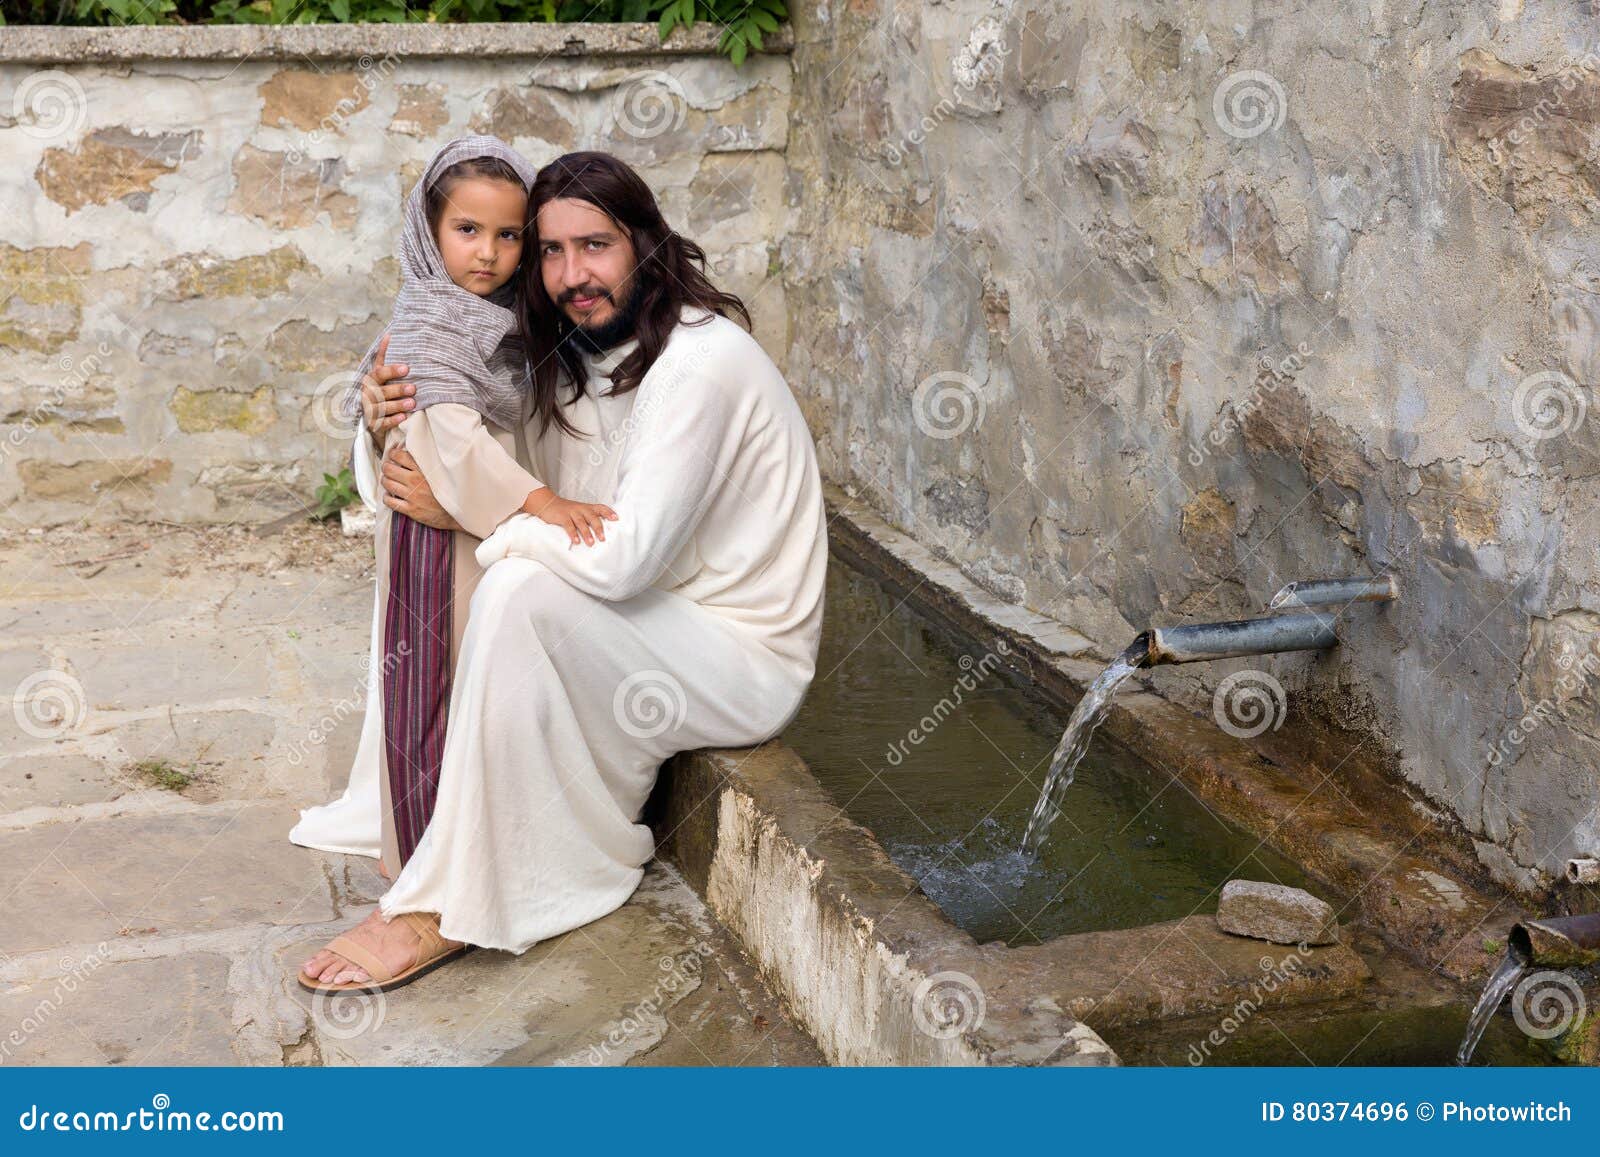 little-girl-jesus-water-well-biblical-sc